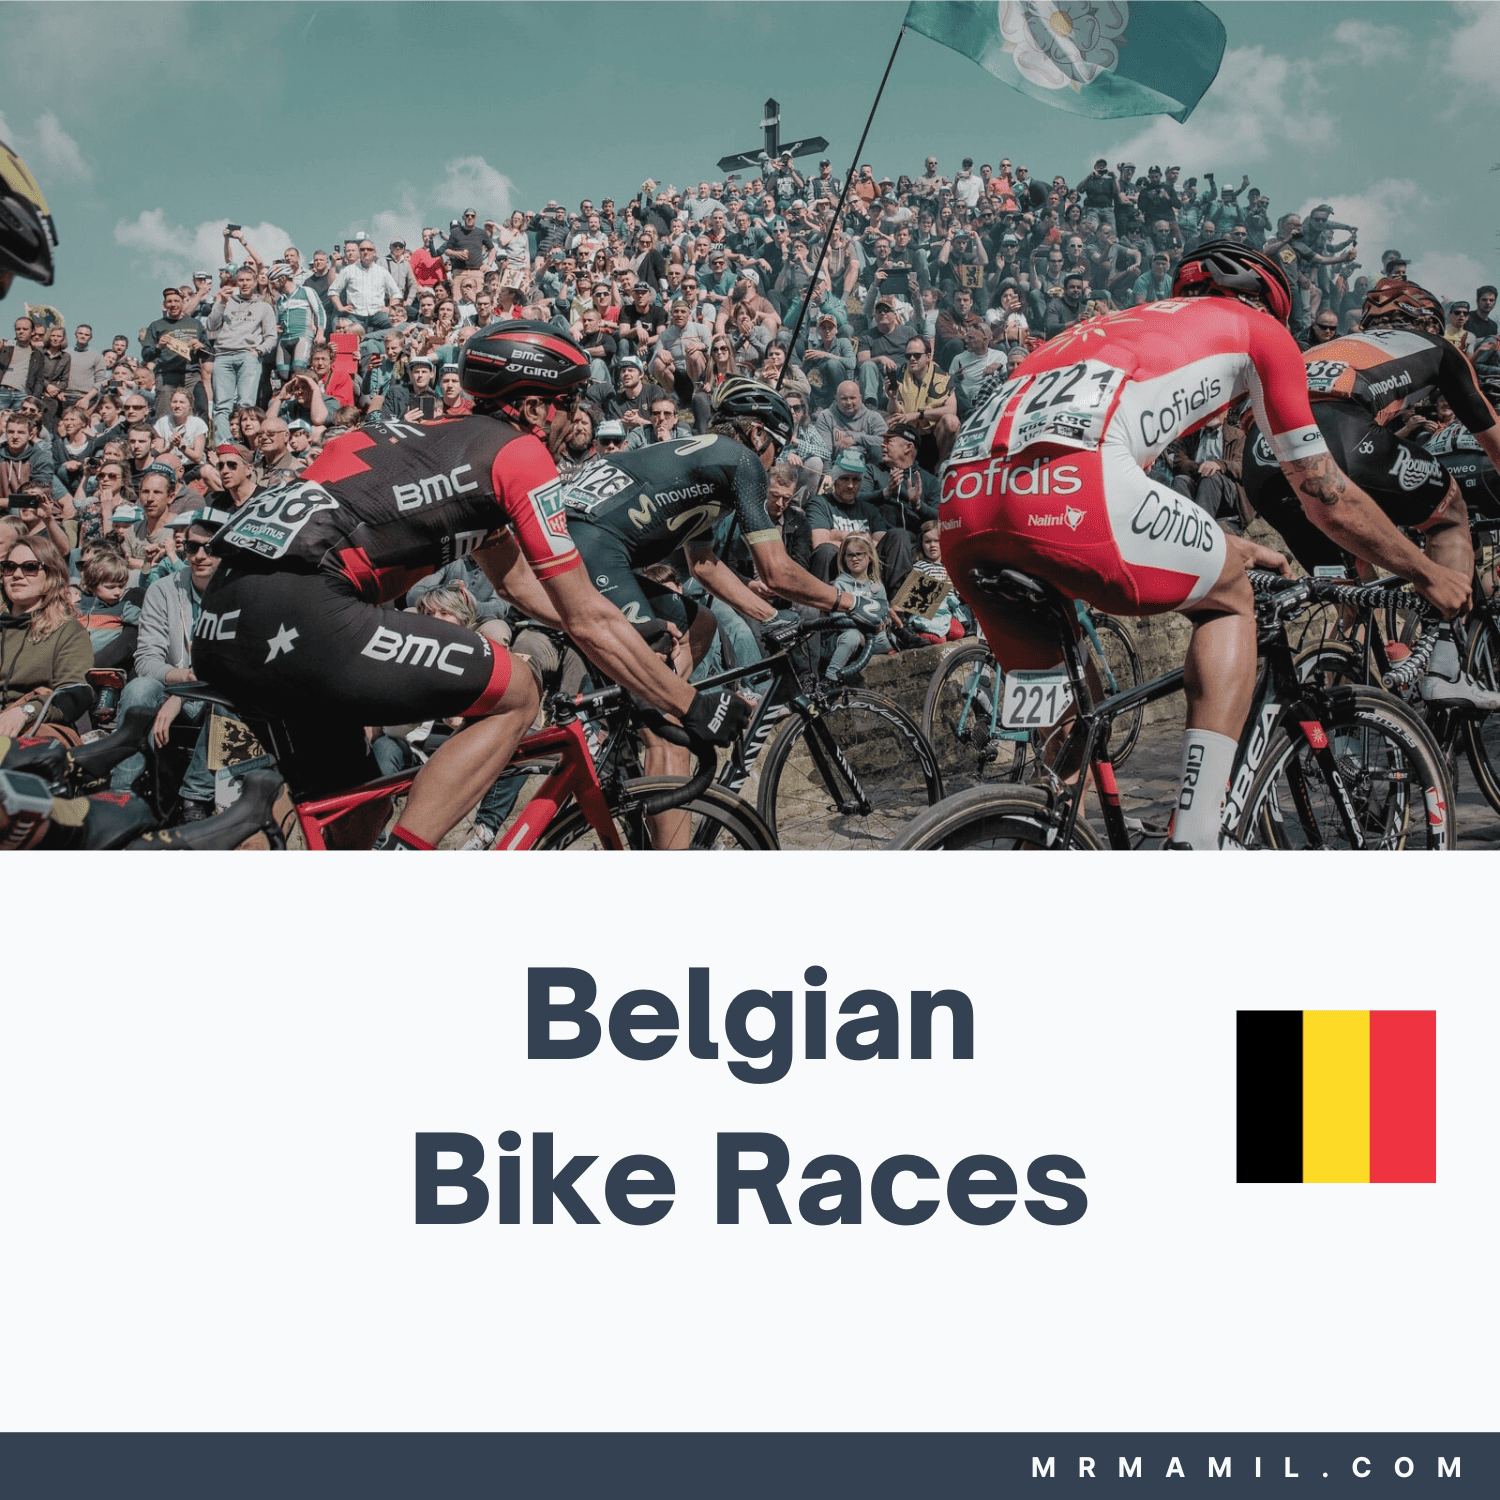 Belgian Bike Races